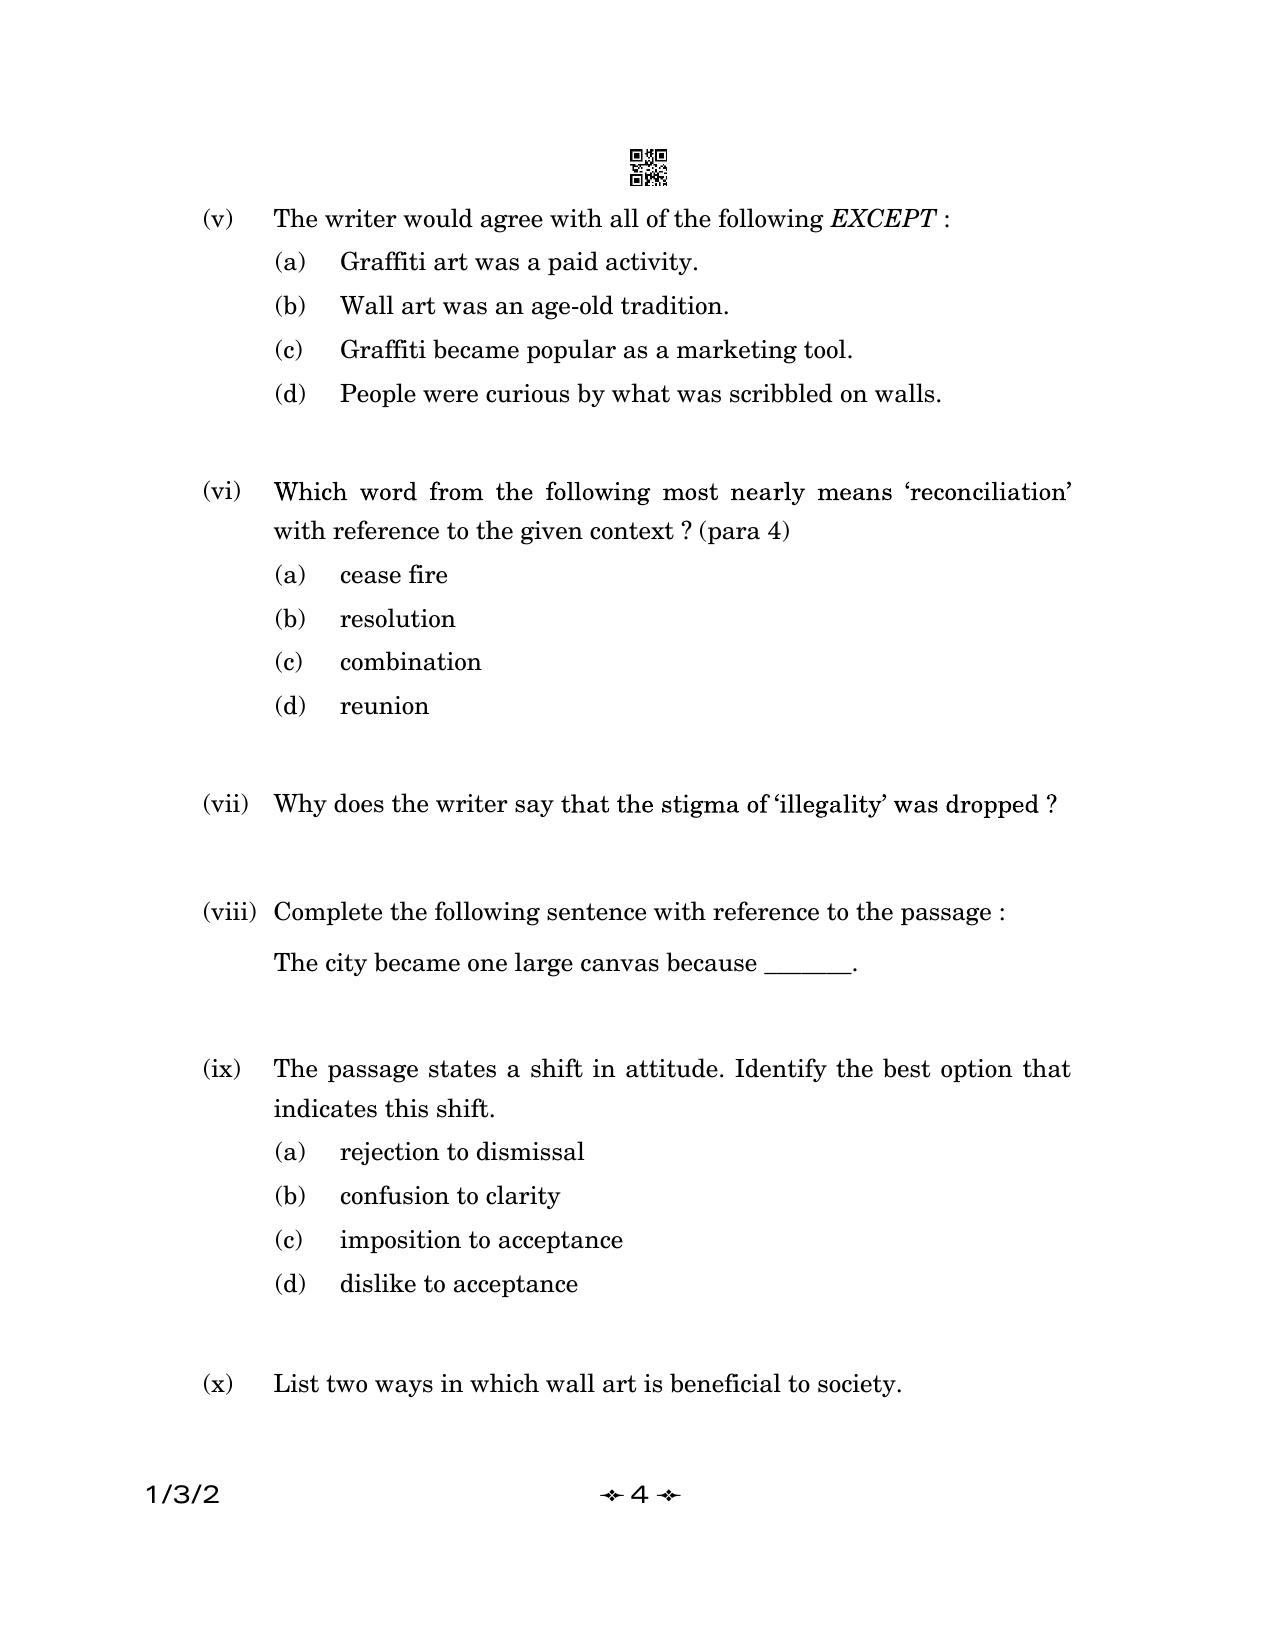 CBSE Class 12 1-3-2 English Core 2023 Question Paper - Page 4